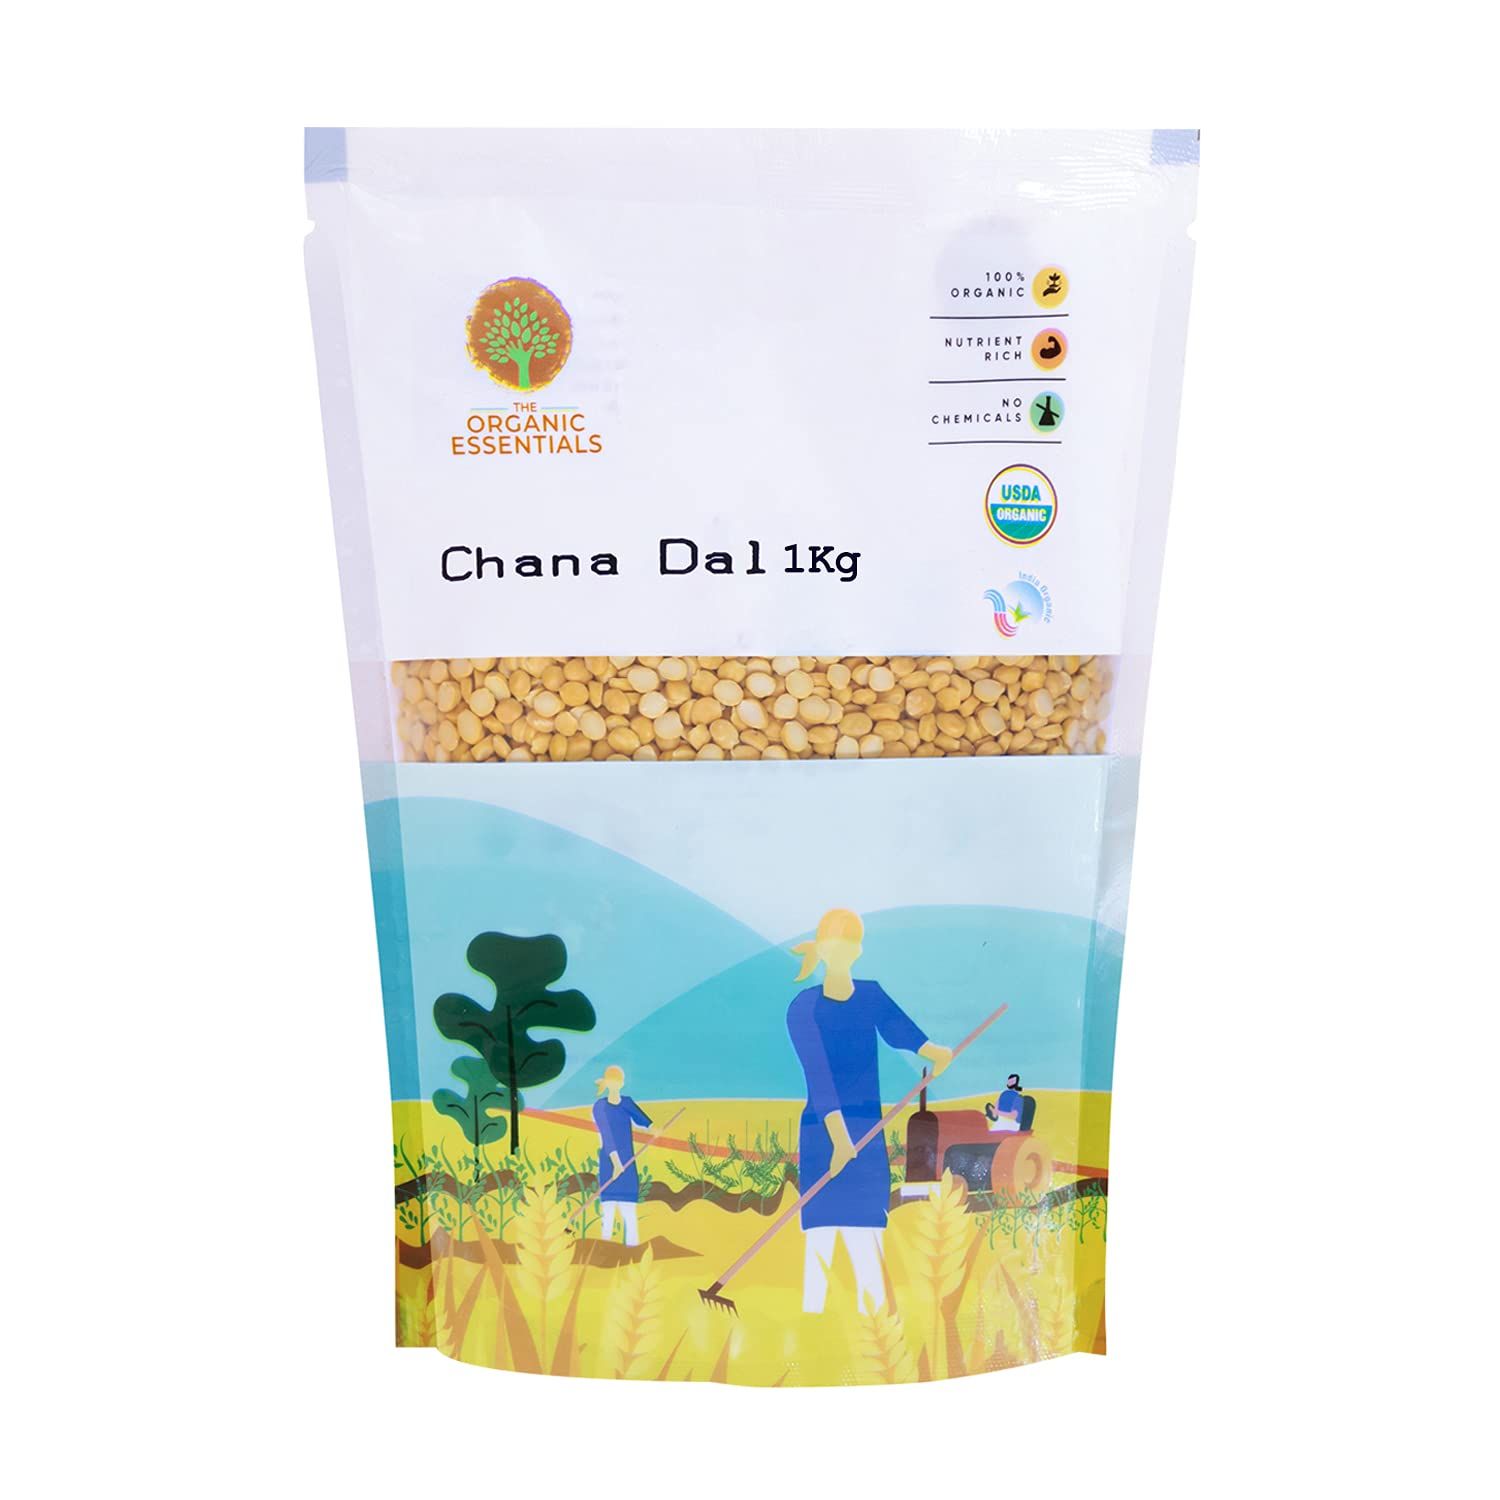 The Organic Essentials  Chana Dal Image